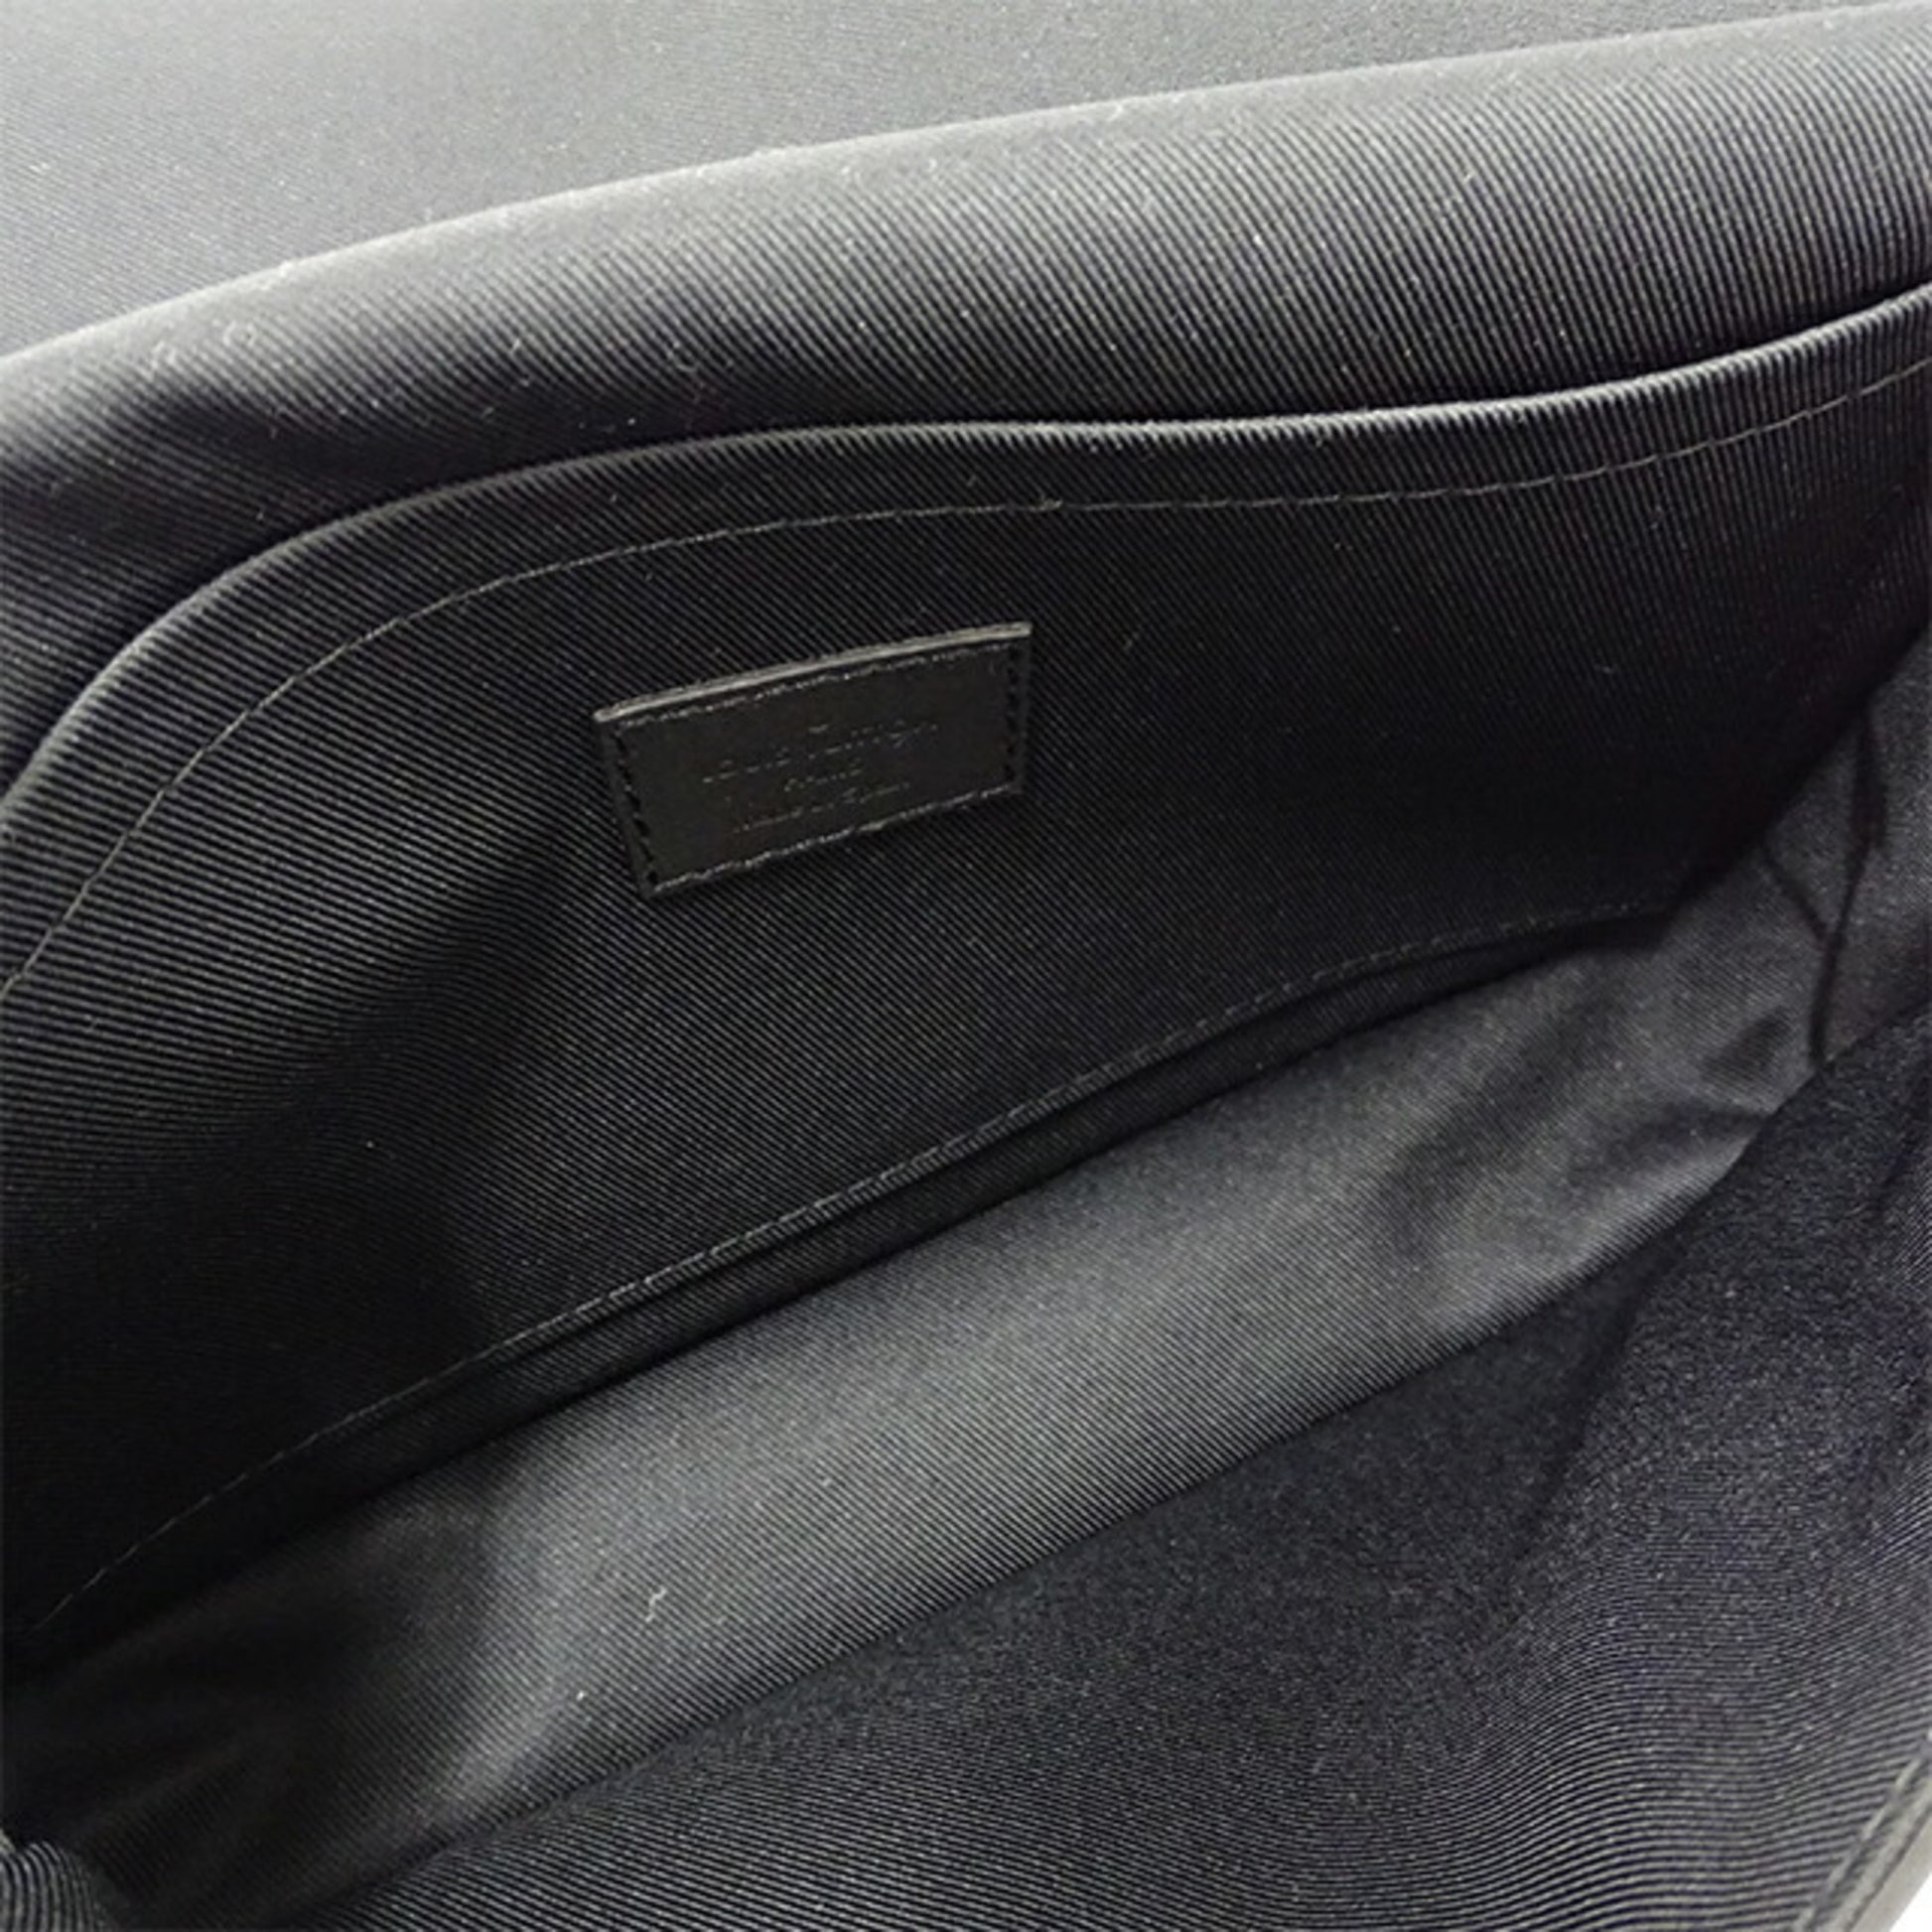 Louis Vuitton LOUIS VUITTON Bag Damier Infini Men's Shoulder Studio Black  Gray N50007